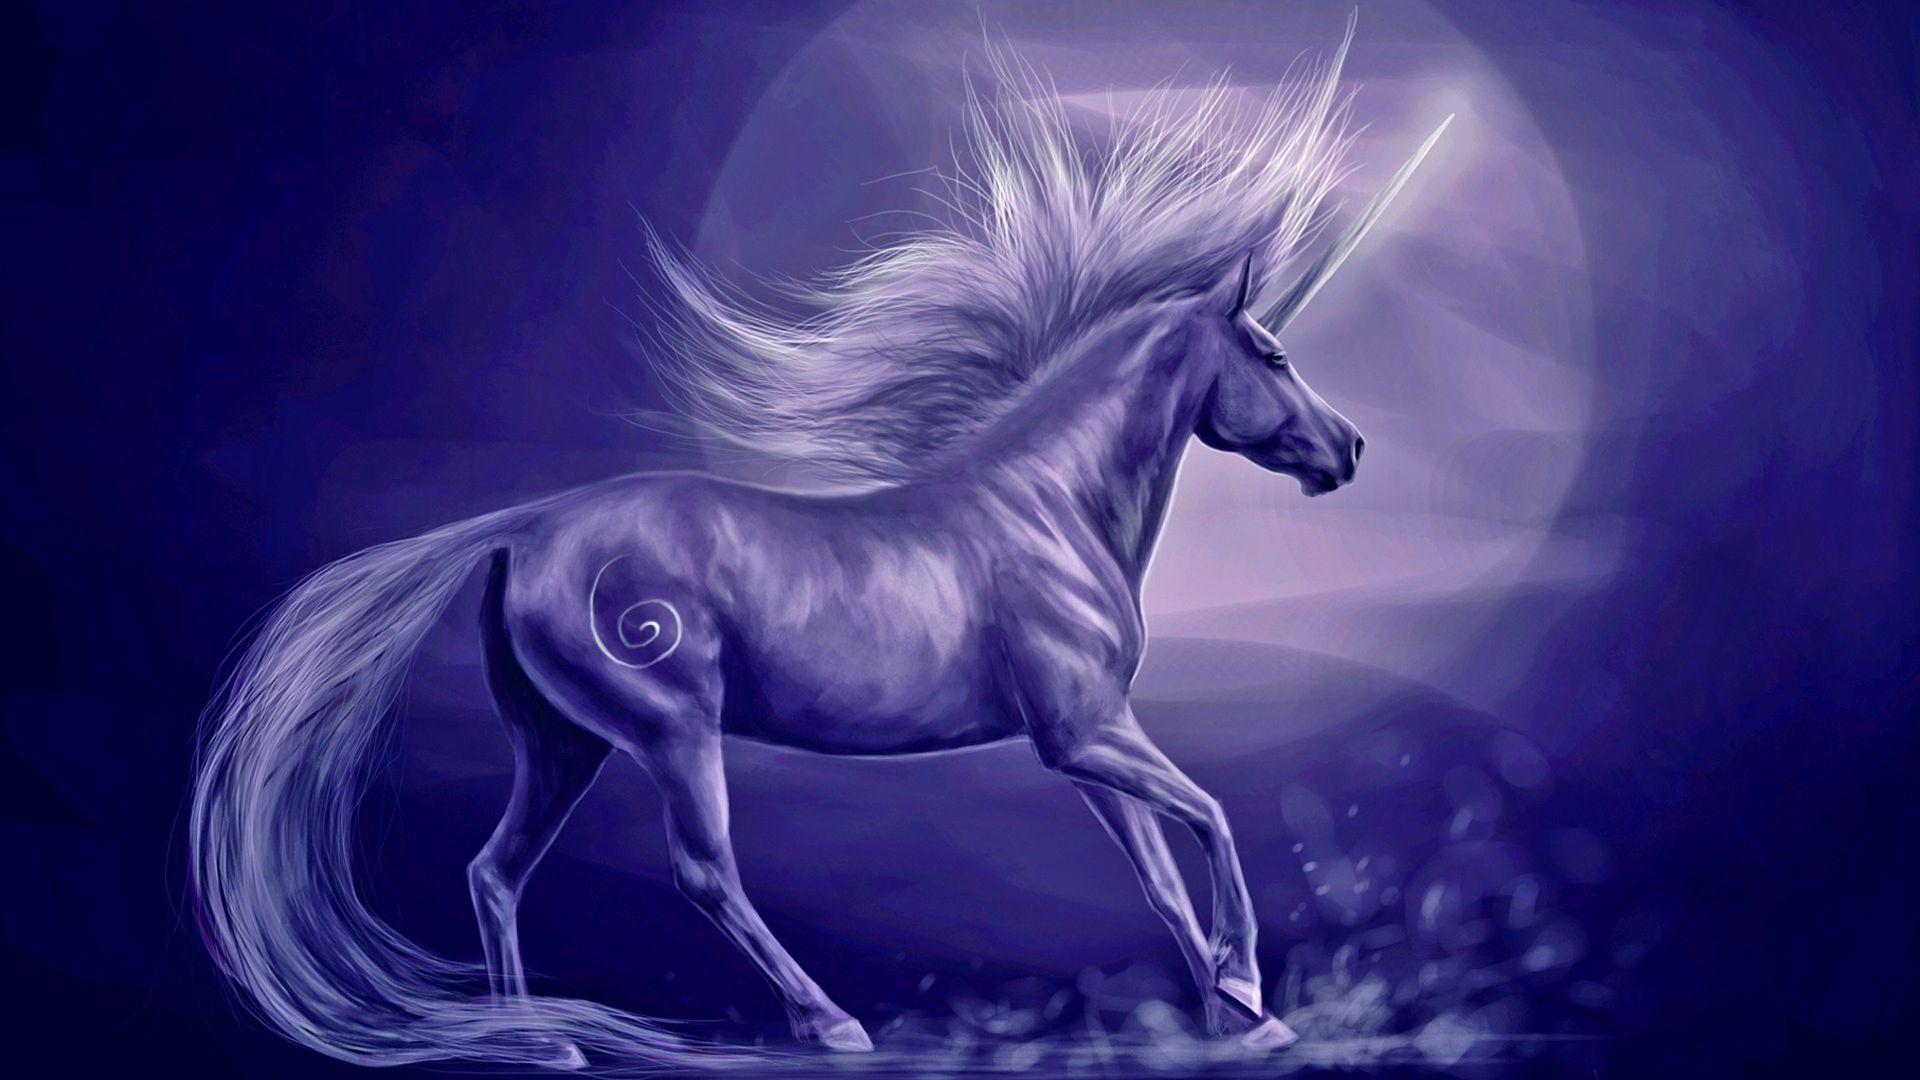 Mystical Unicorn Wallpapers - Top Free Mystical Unicorn Backgrounds ...